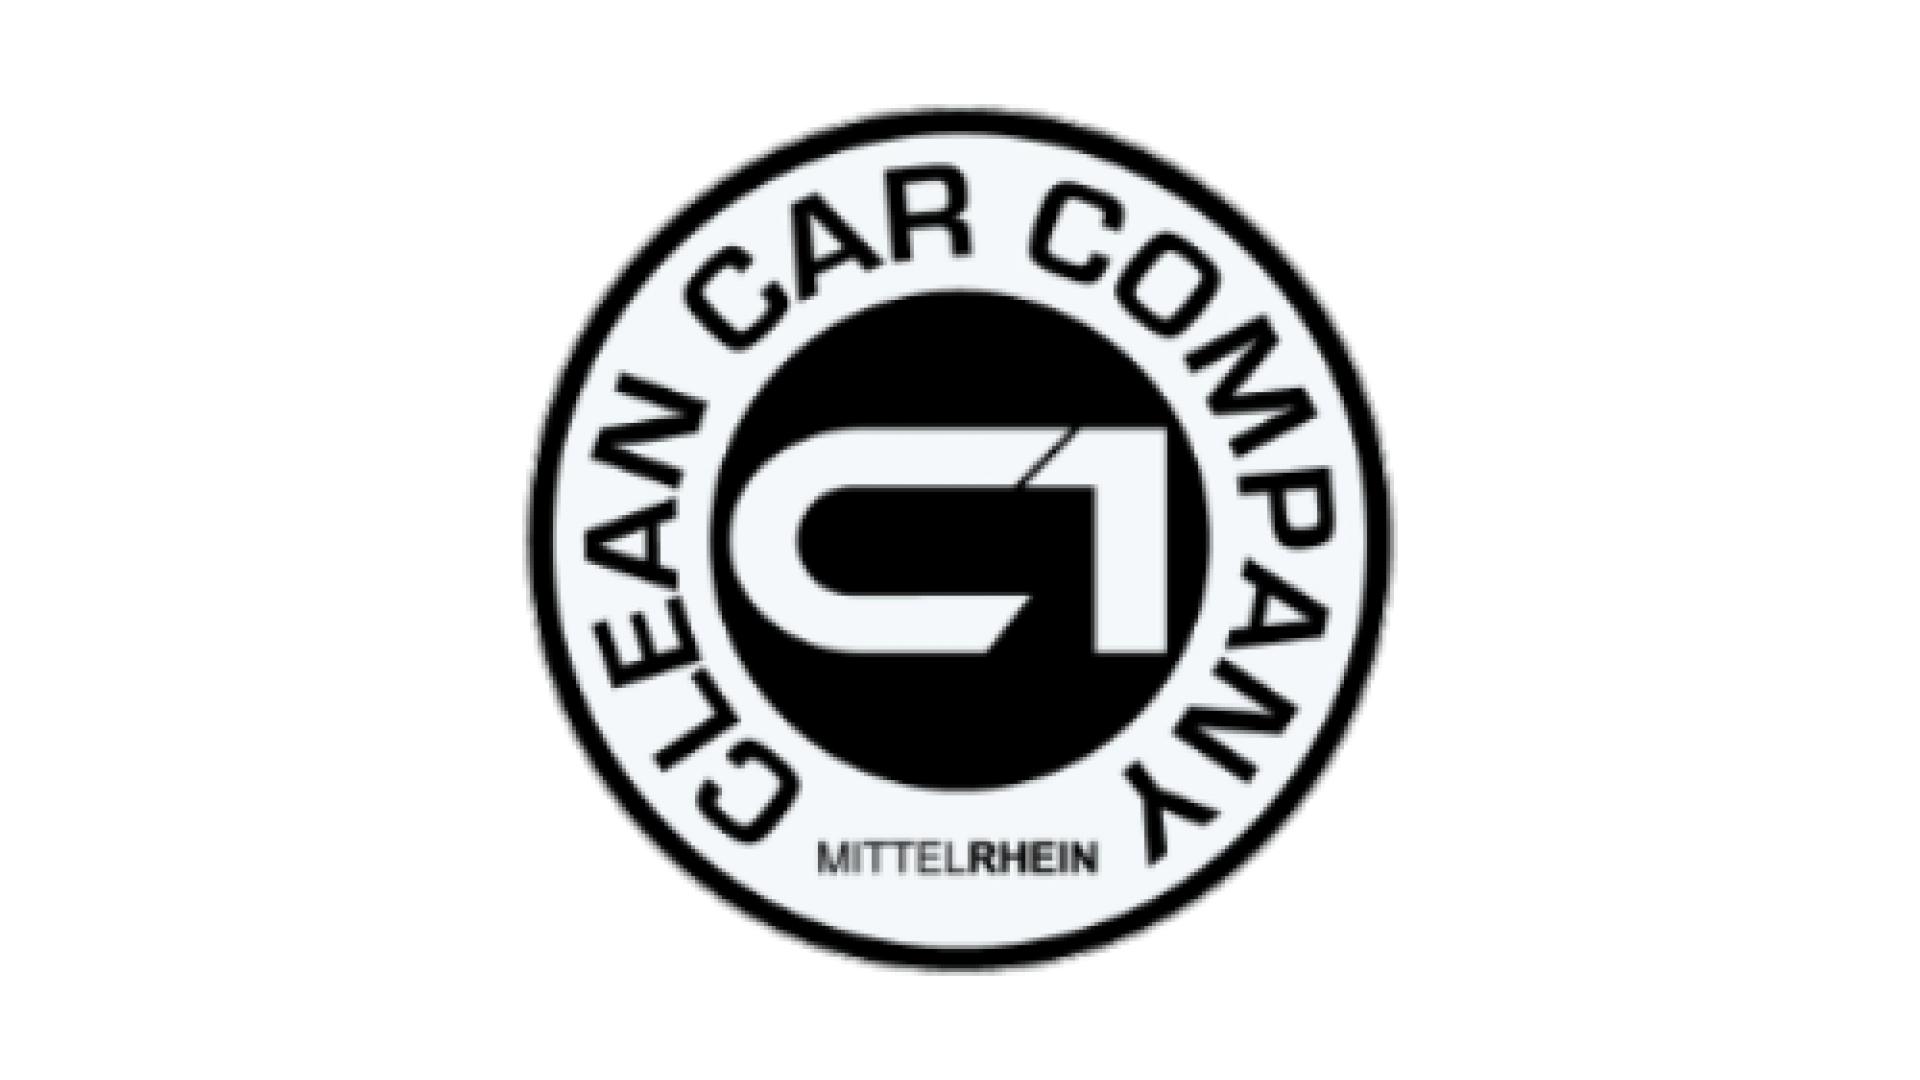 Clean car Company-Kundenlogo-Homepage - freigestellt.png